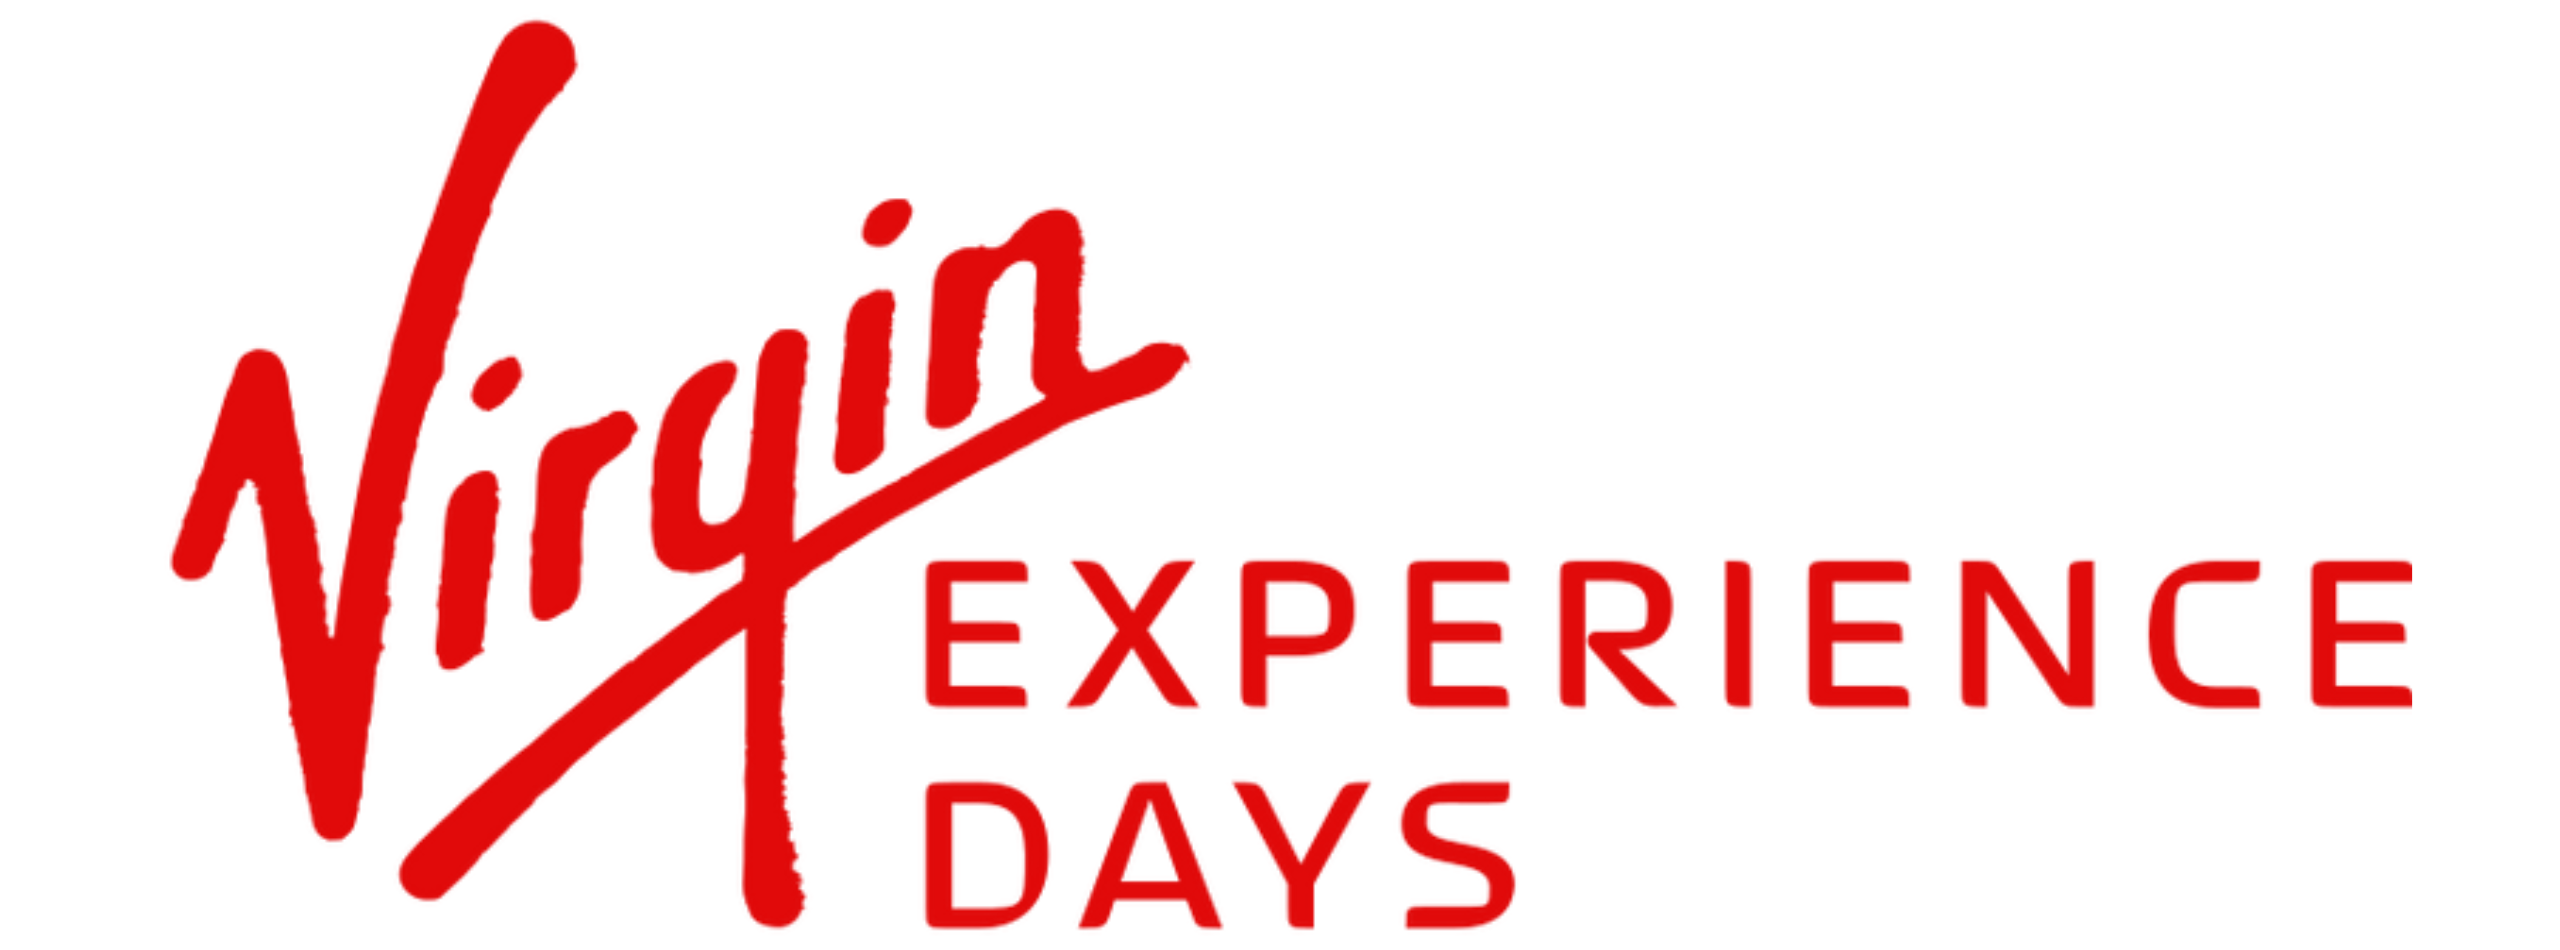 Virgin_Experience_Days_Logo